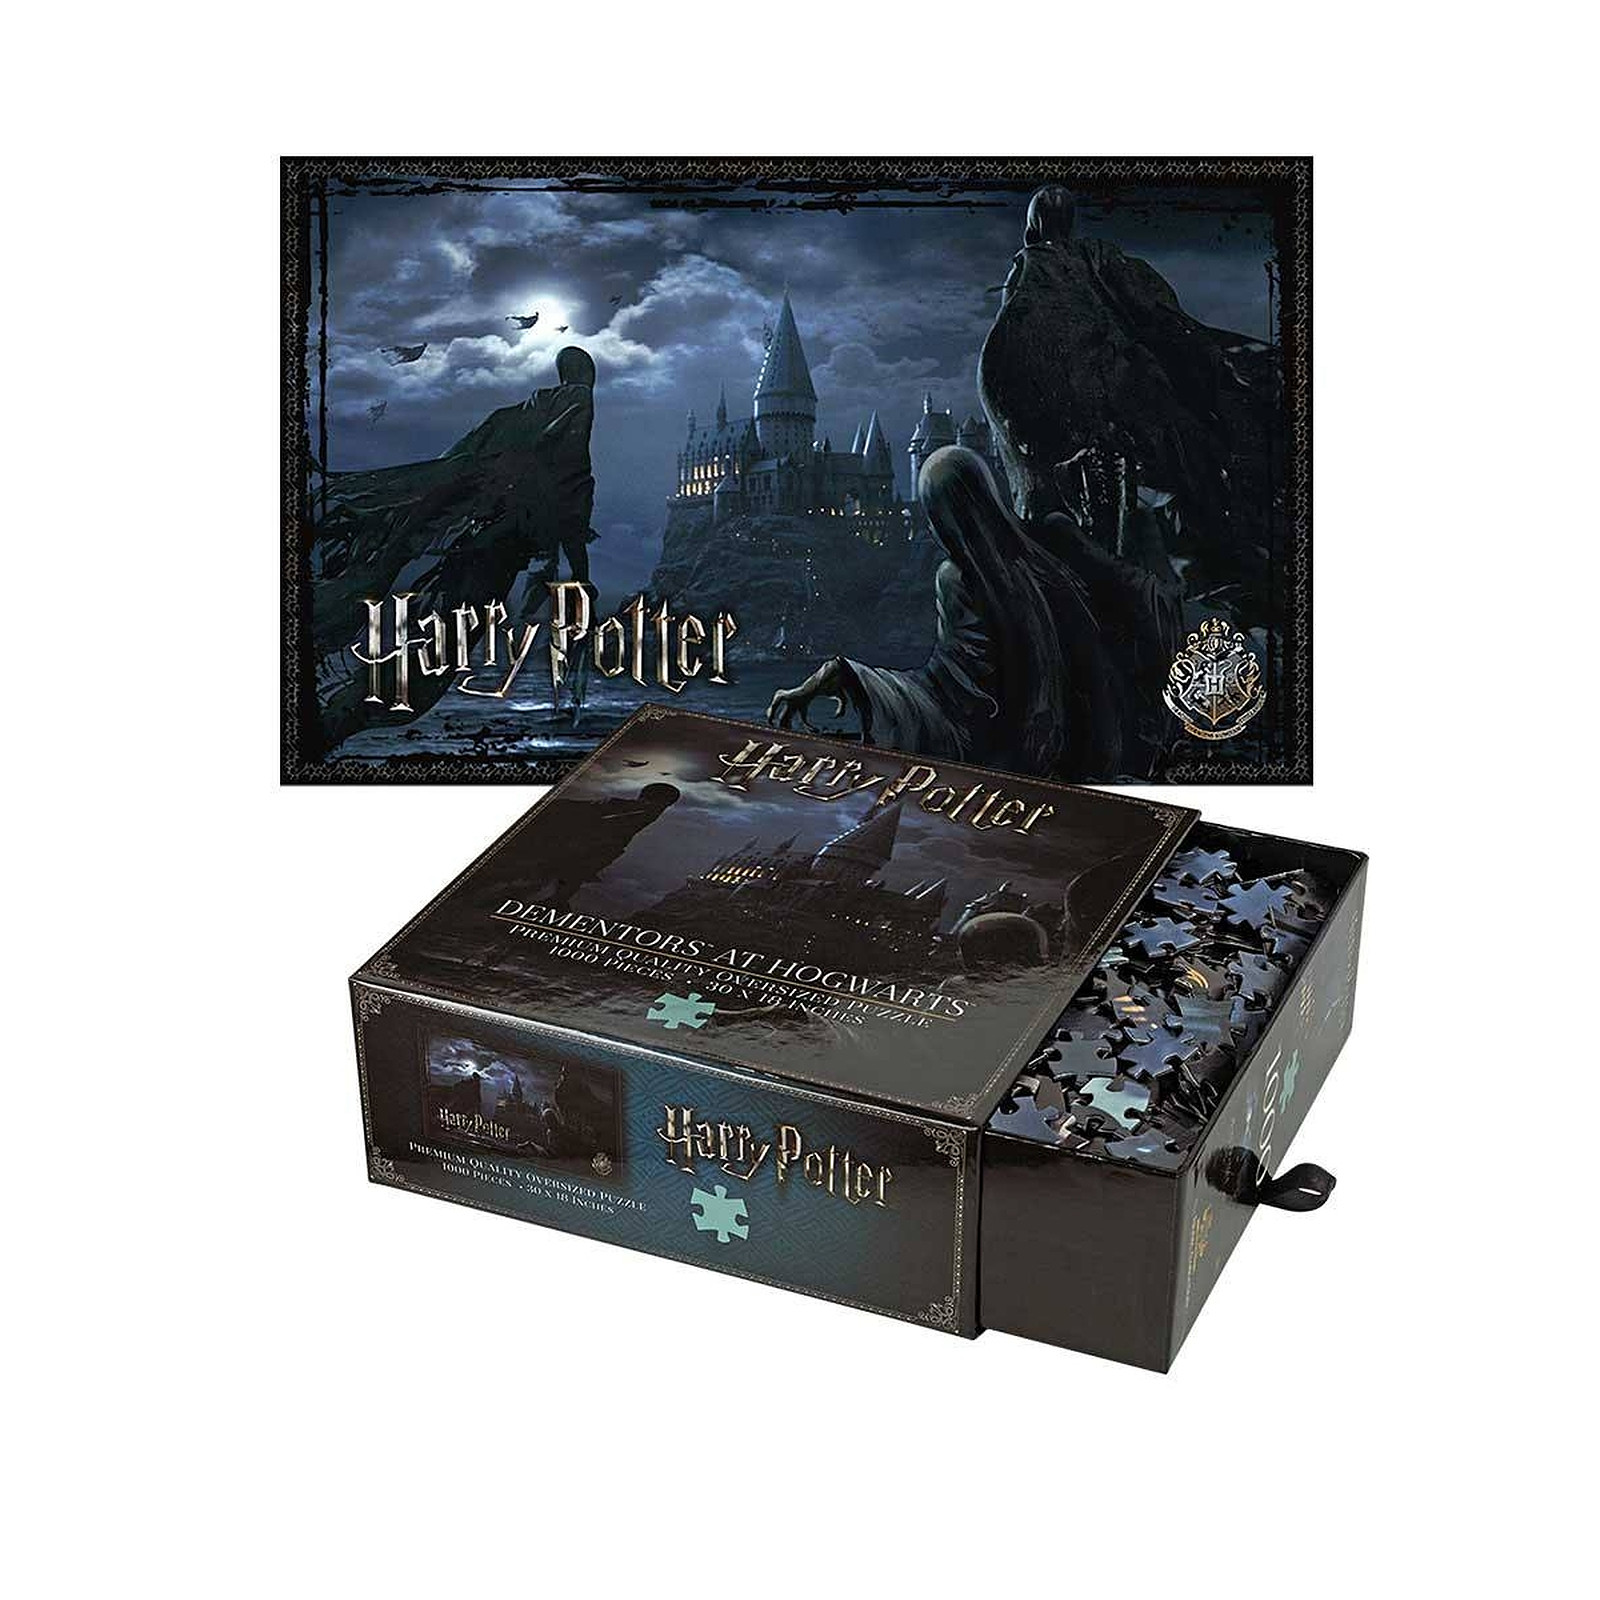 Harry Potter - Puzzle Dementors at Hogwarts - Puzzle Noble Collection